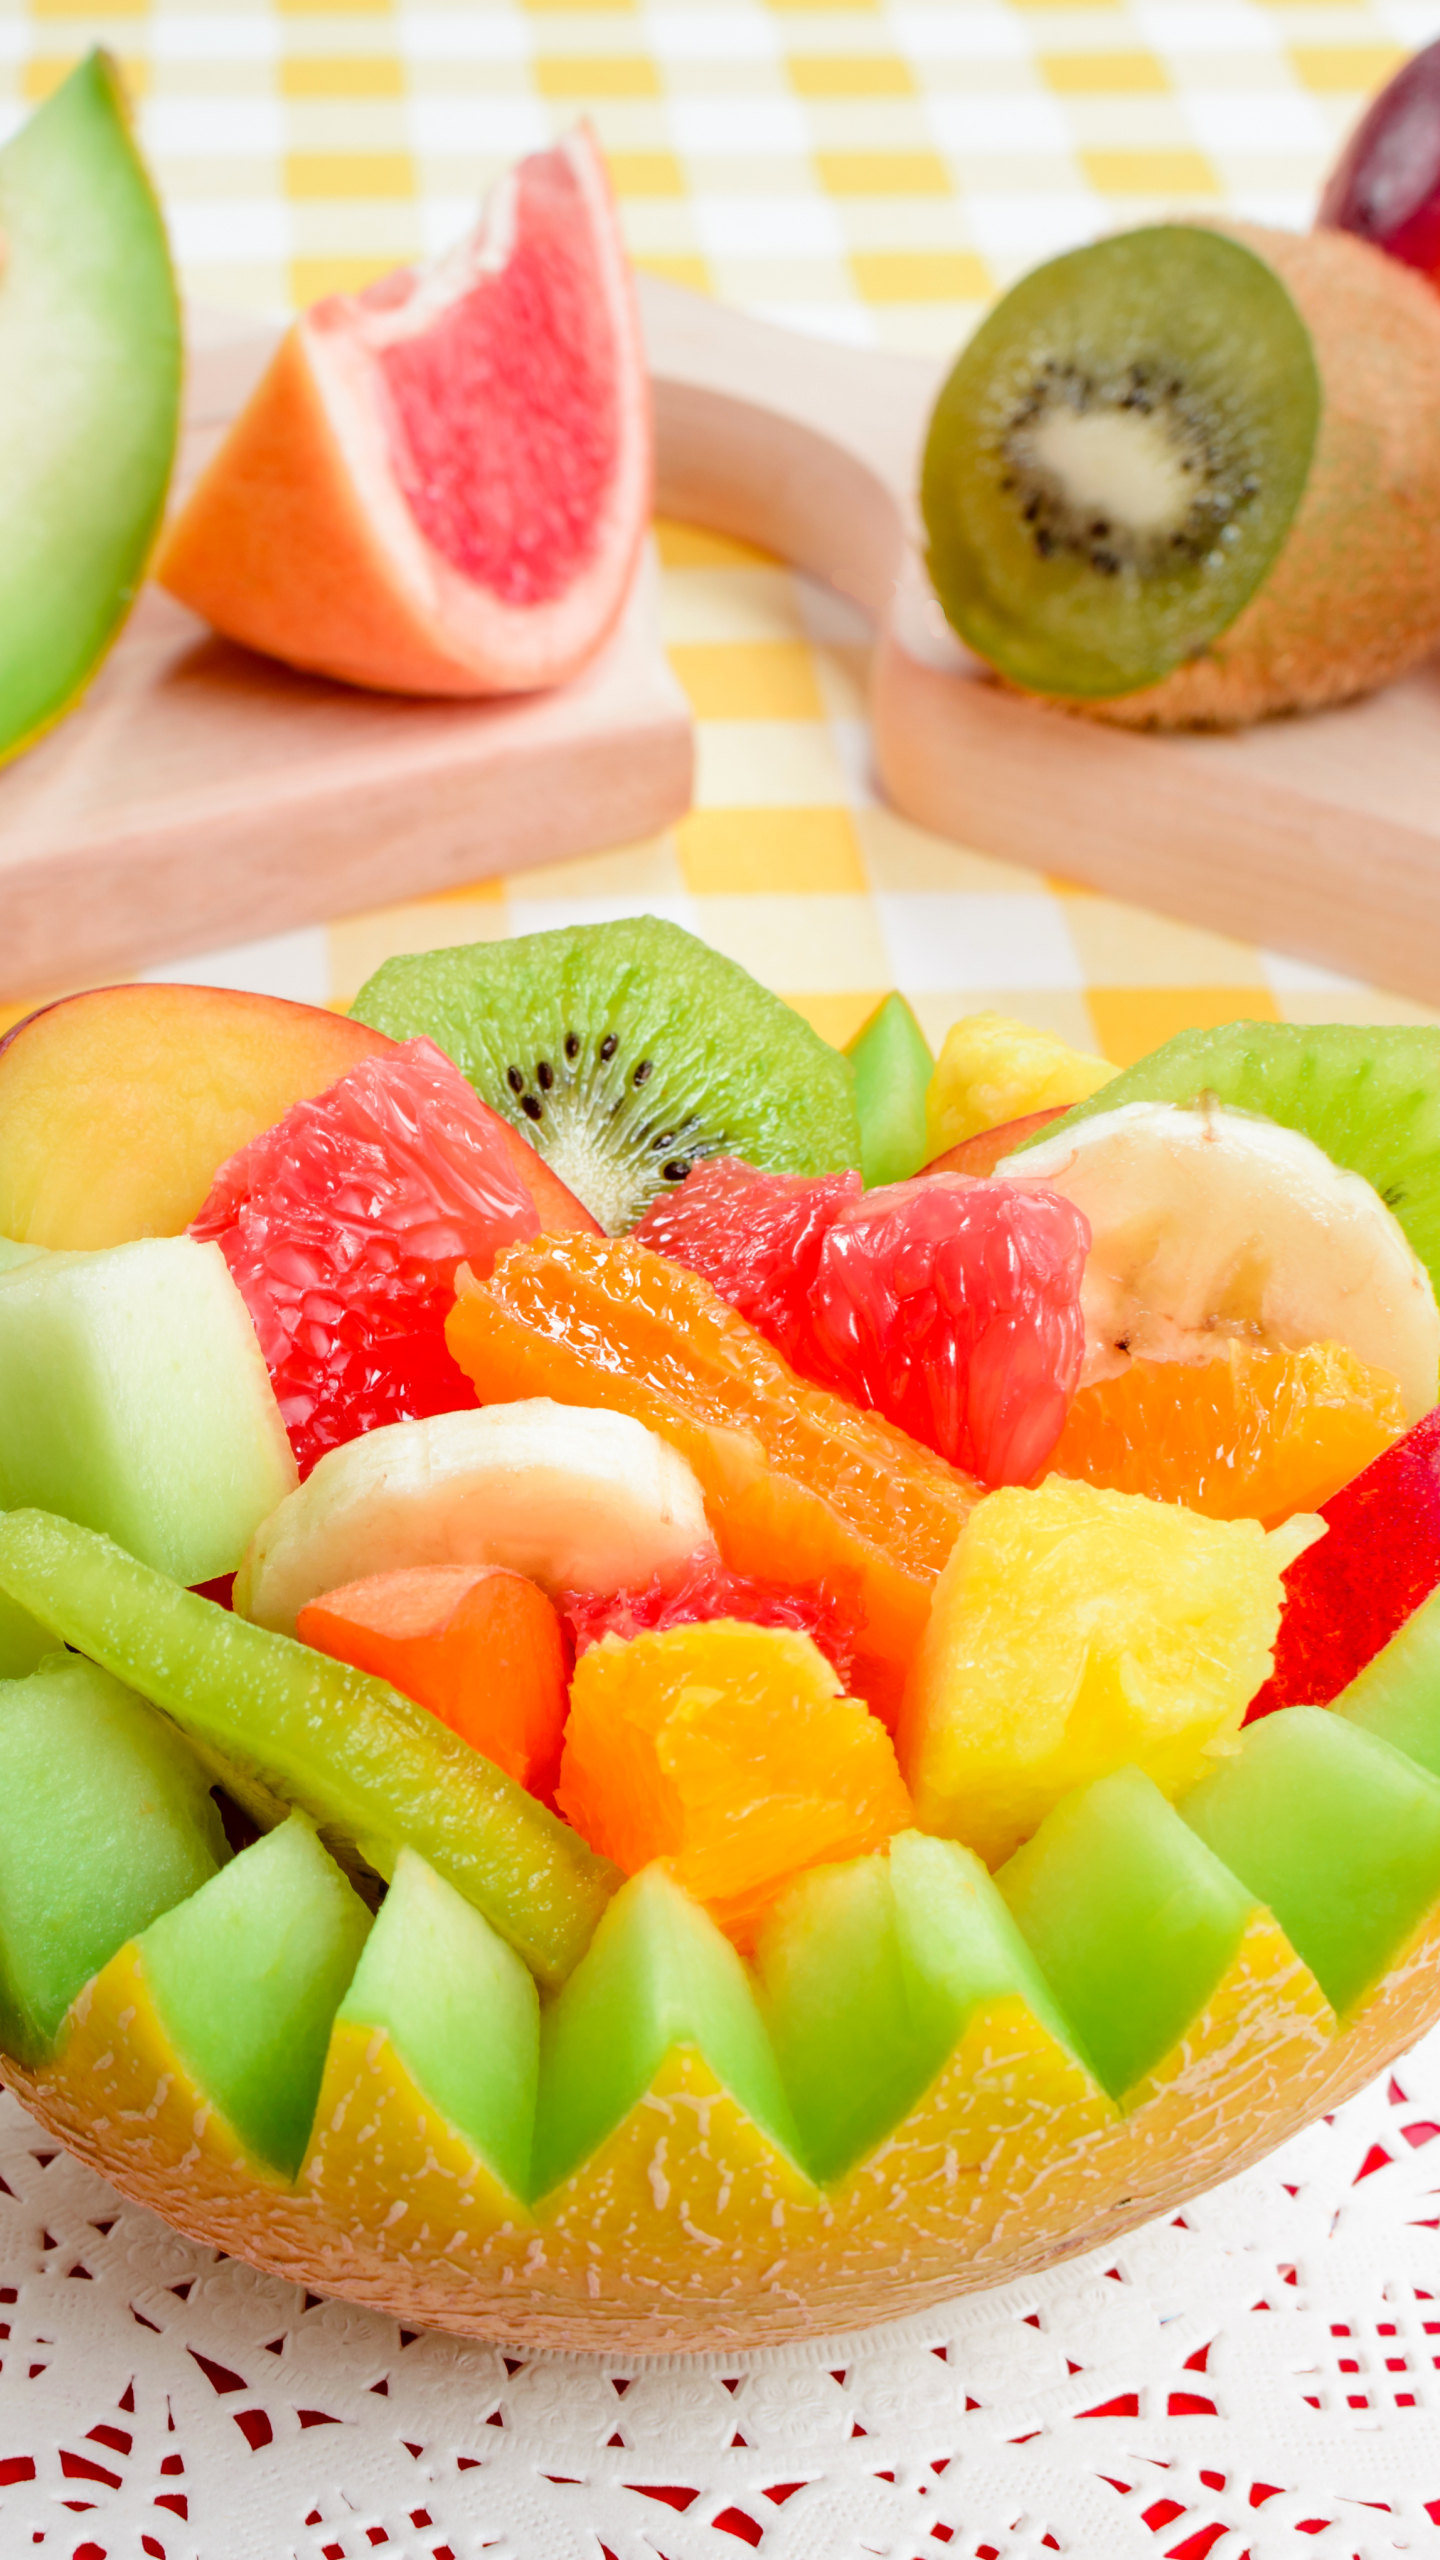 Descarga gratis la imagen Frutas, Kiwi, Fruta, Piña, Melón, Alimento, Naranja) en el escritorio de tu PC